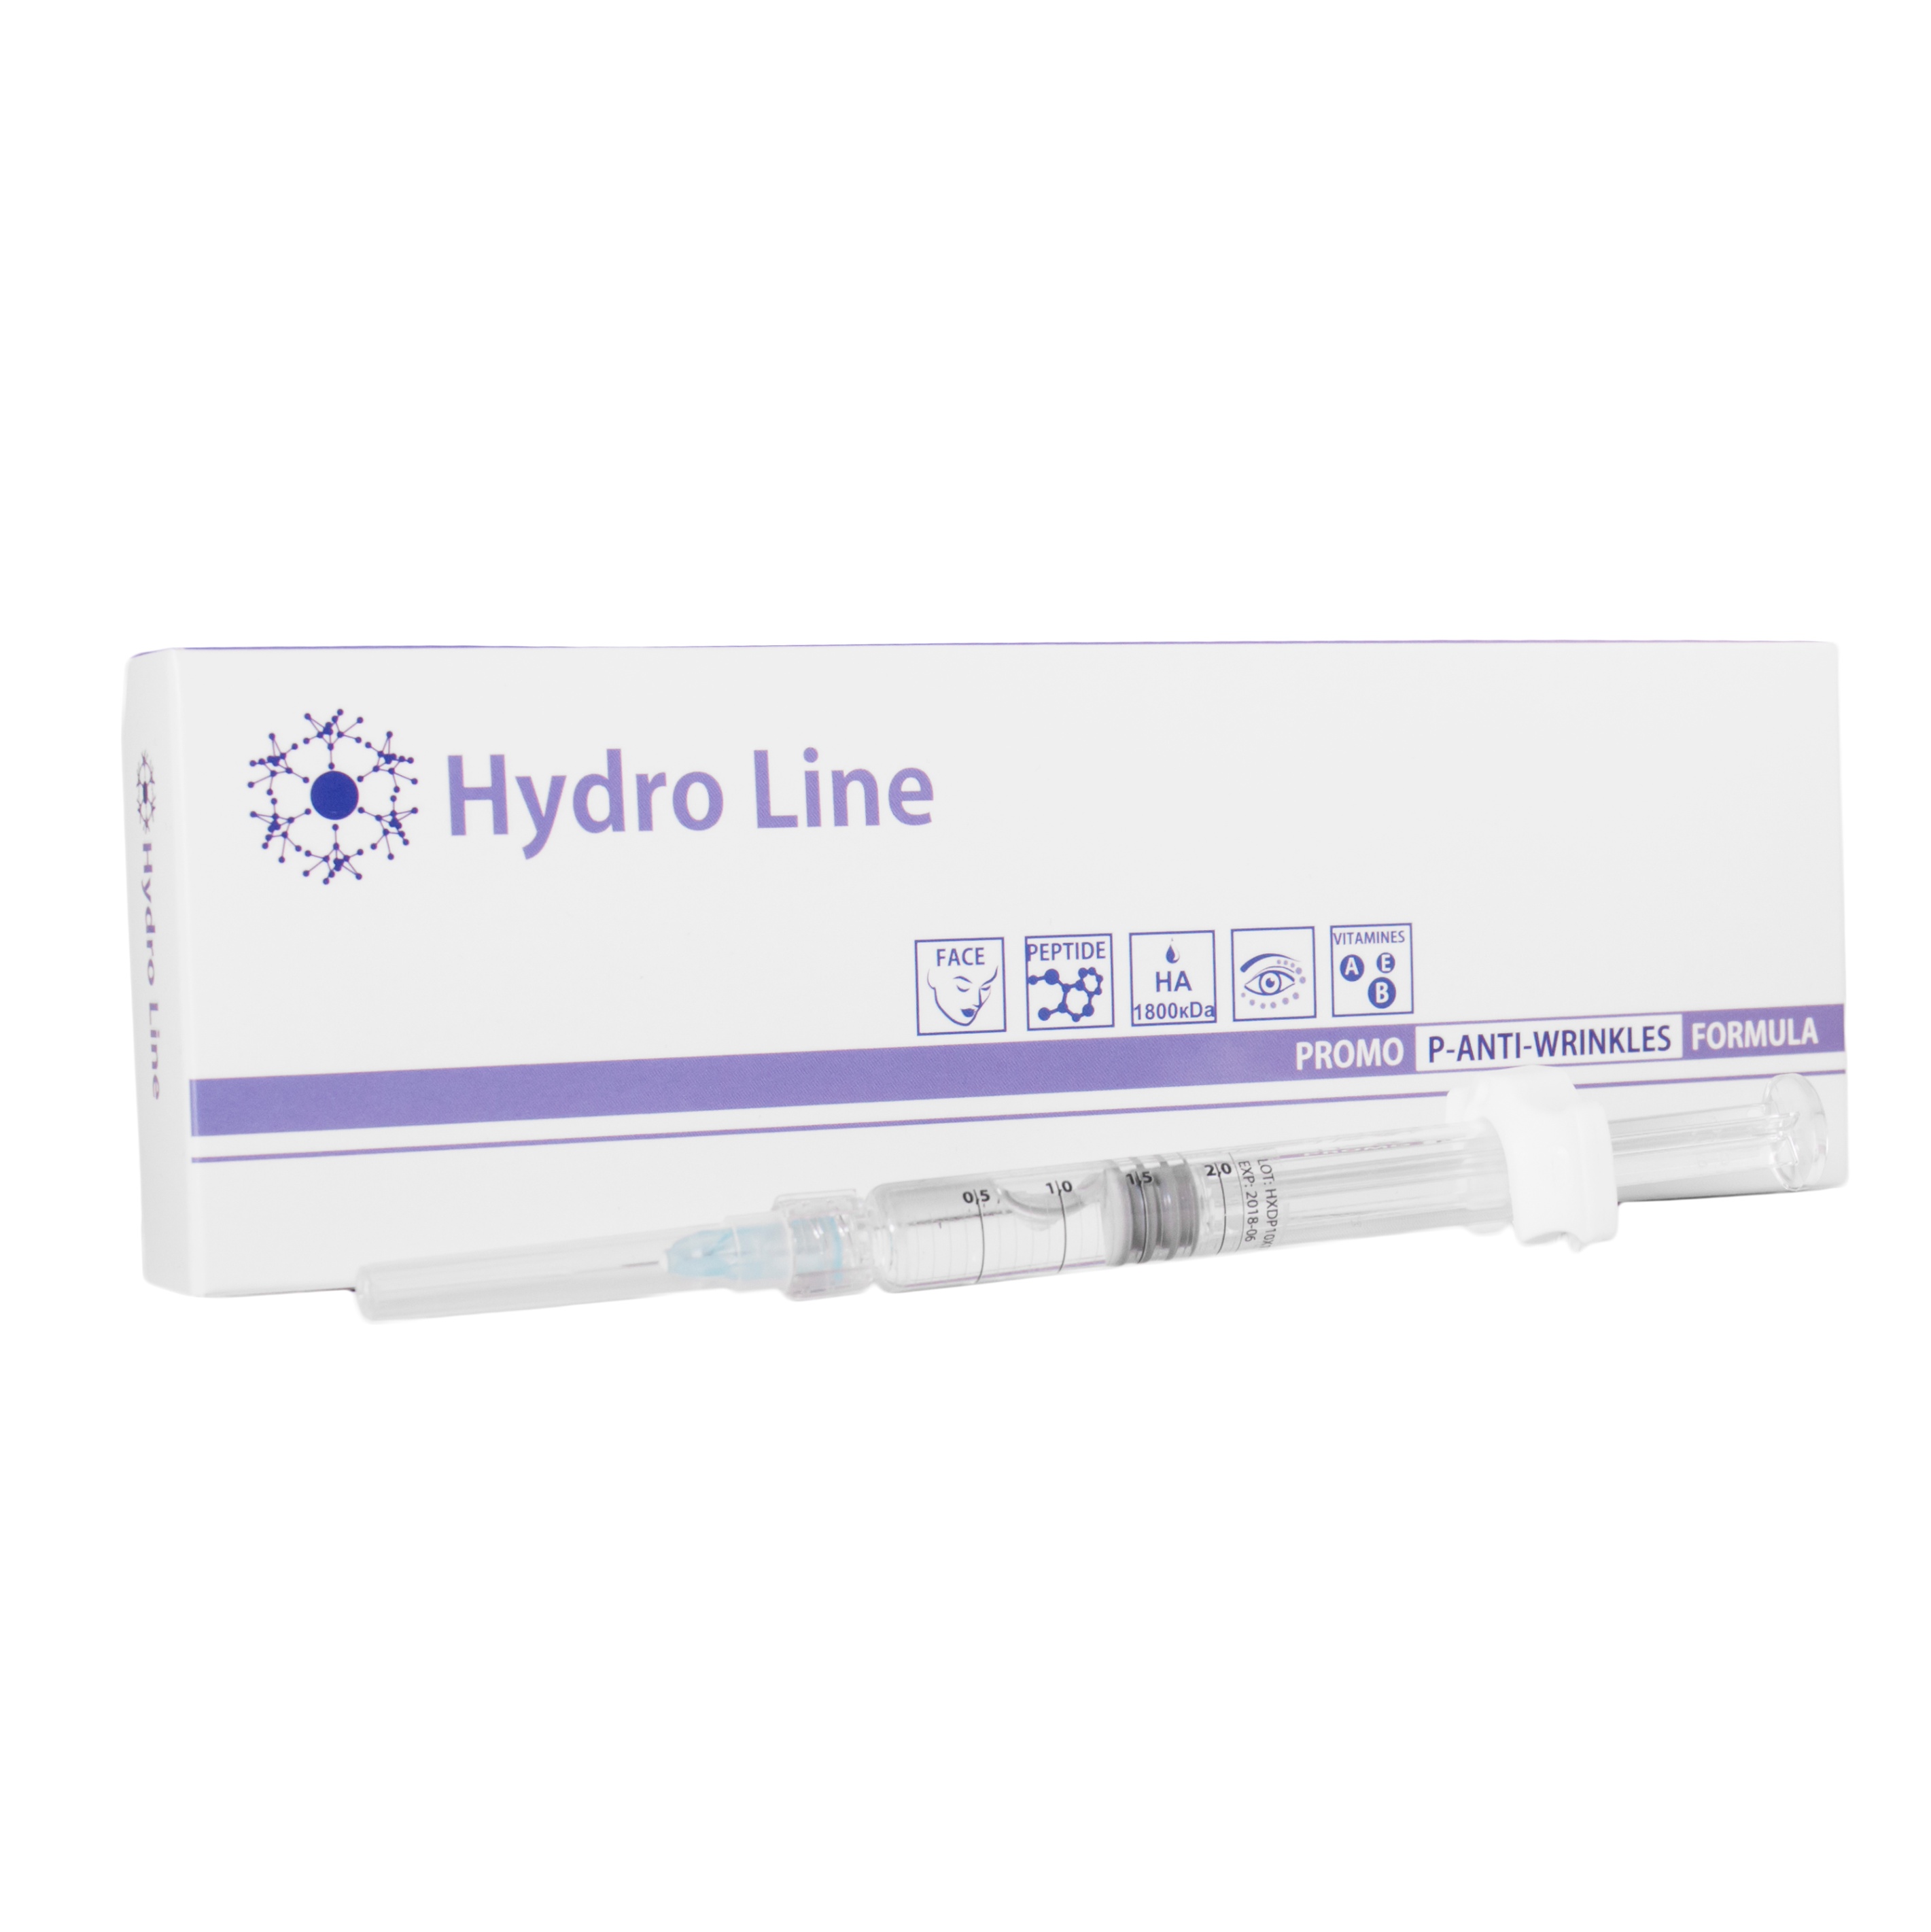 Биорепарация препаратом Hydro Line Peptide, шприц (2 мл, Россия)